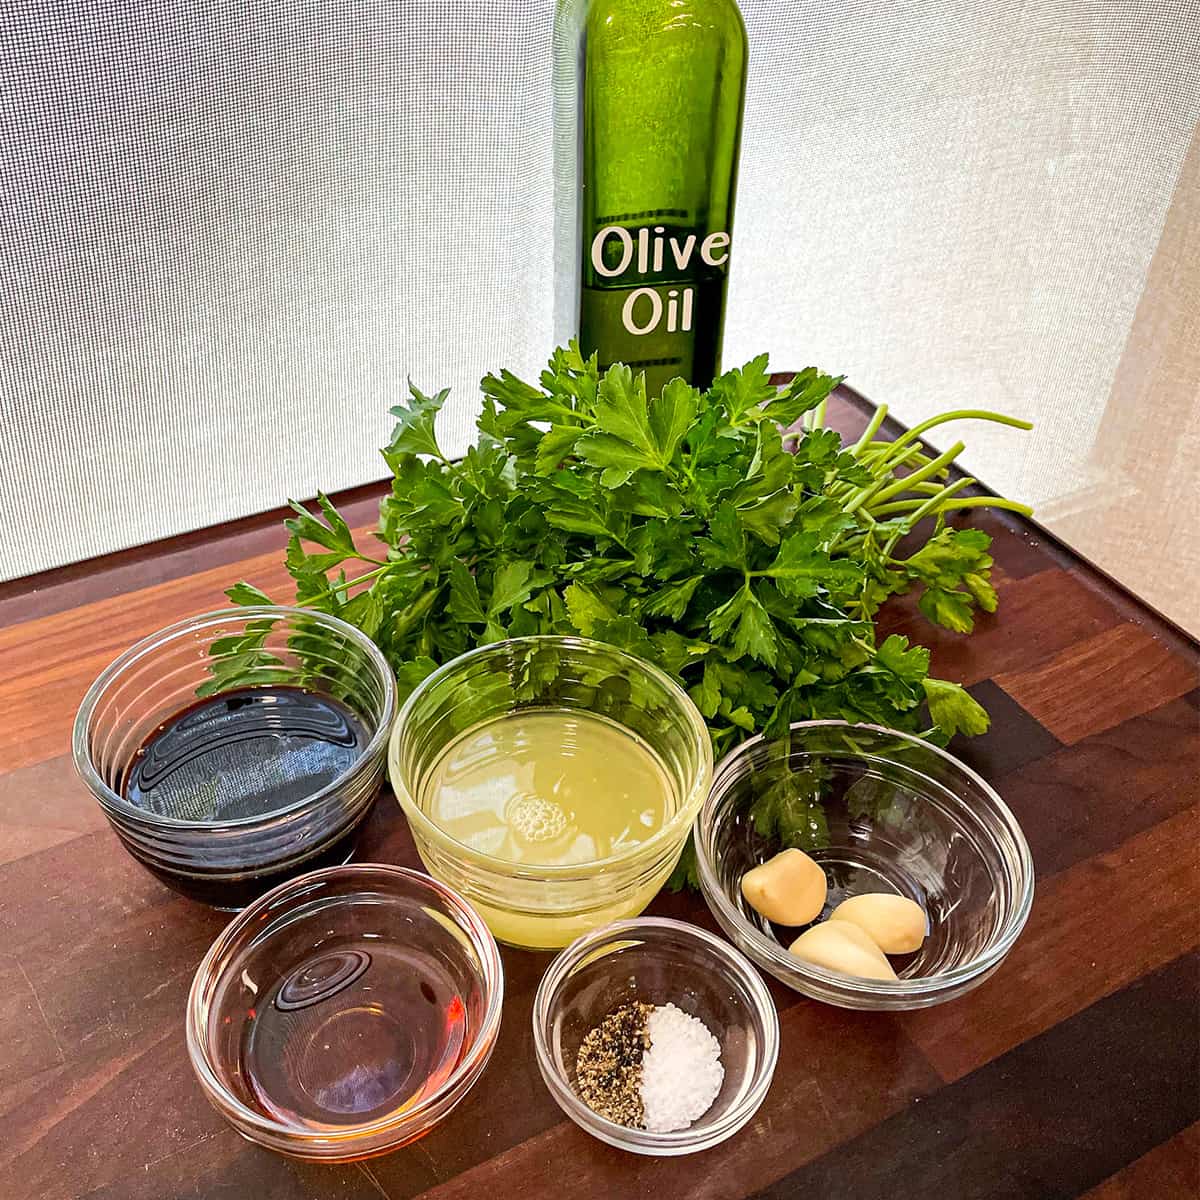 prepped ingredients for making a parsley vinaigrette salad dressing.